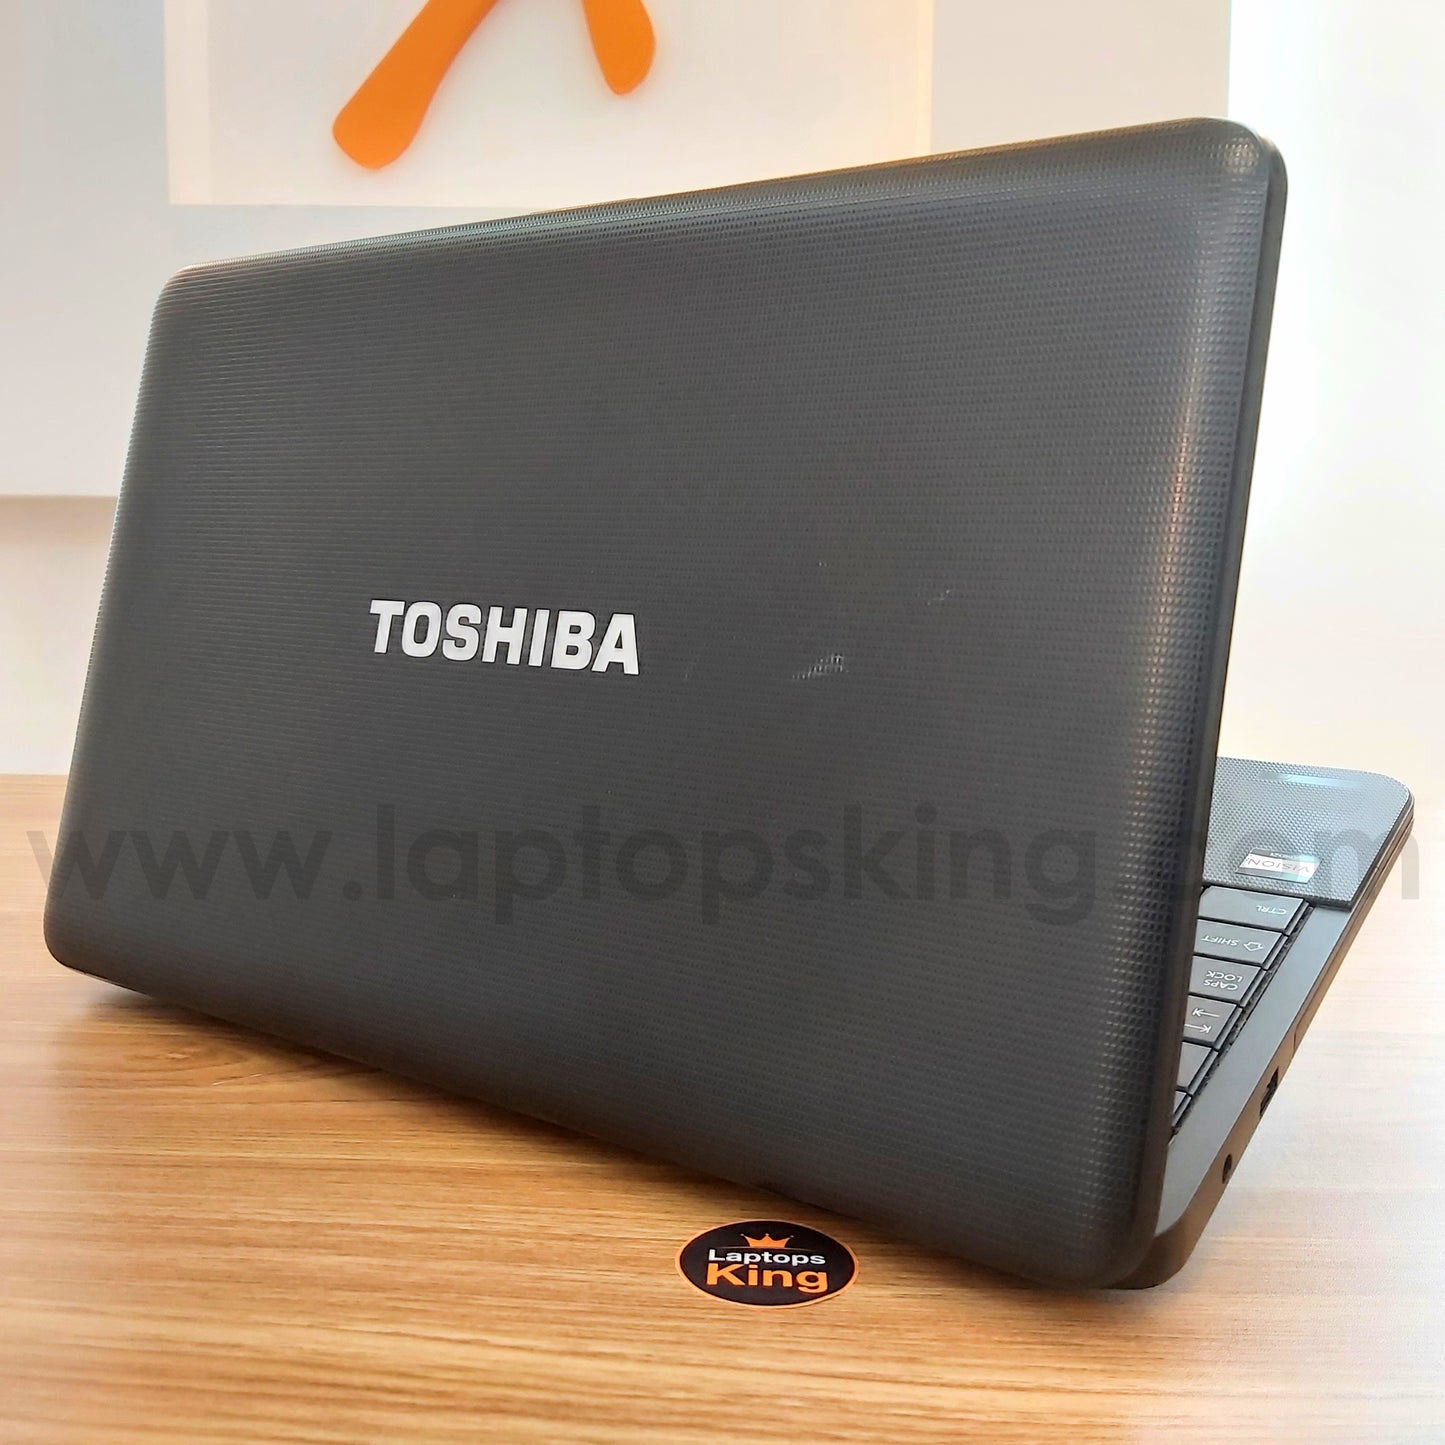 Toshiba Satellite C855d DC Laptop (Used Very Clean)